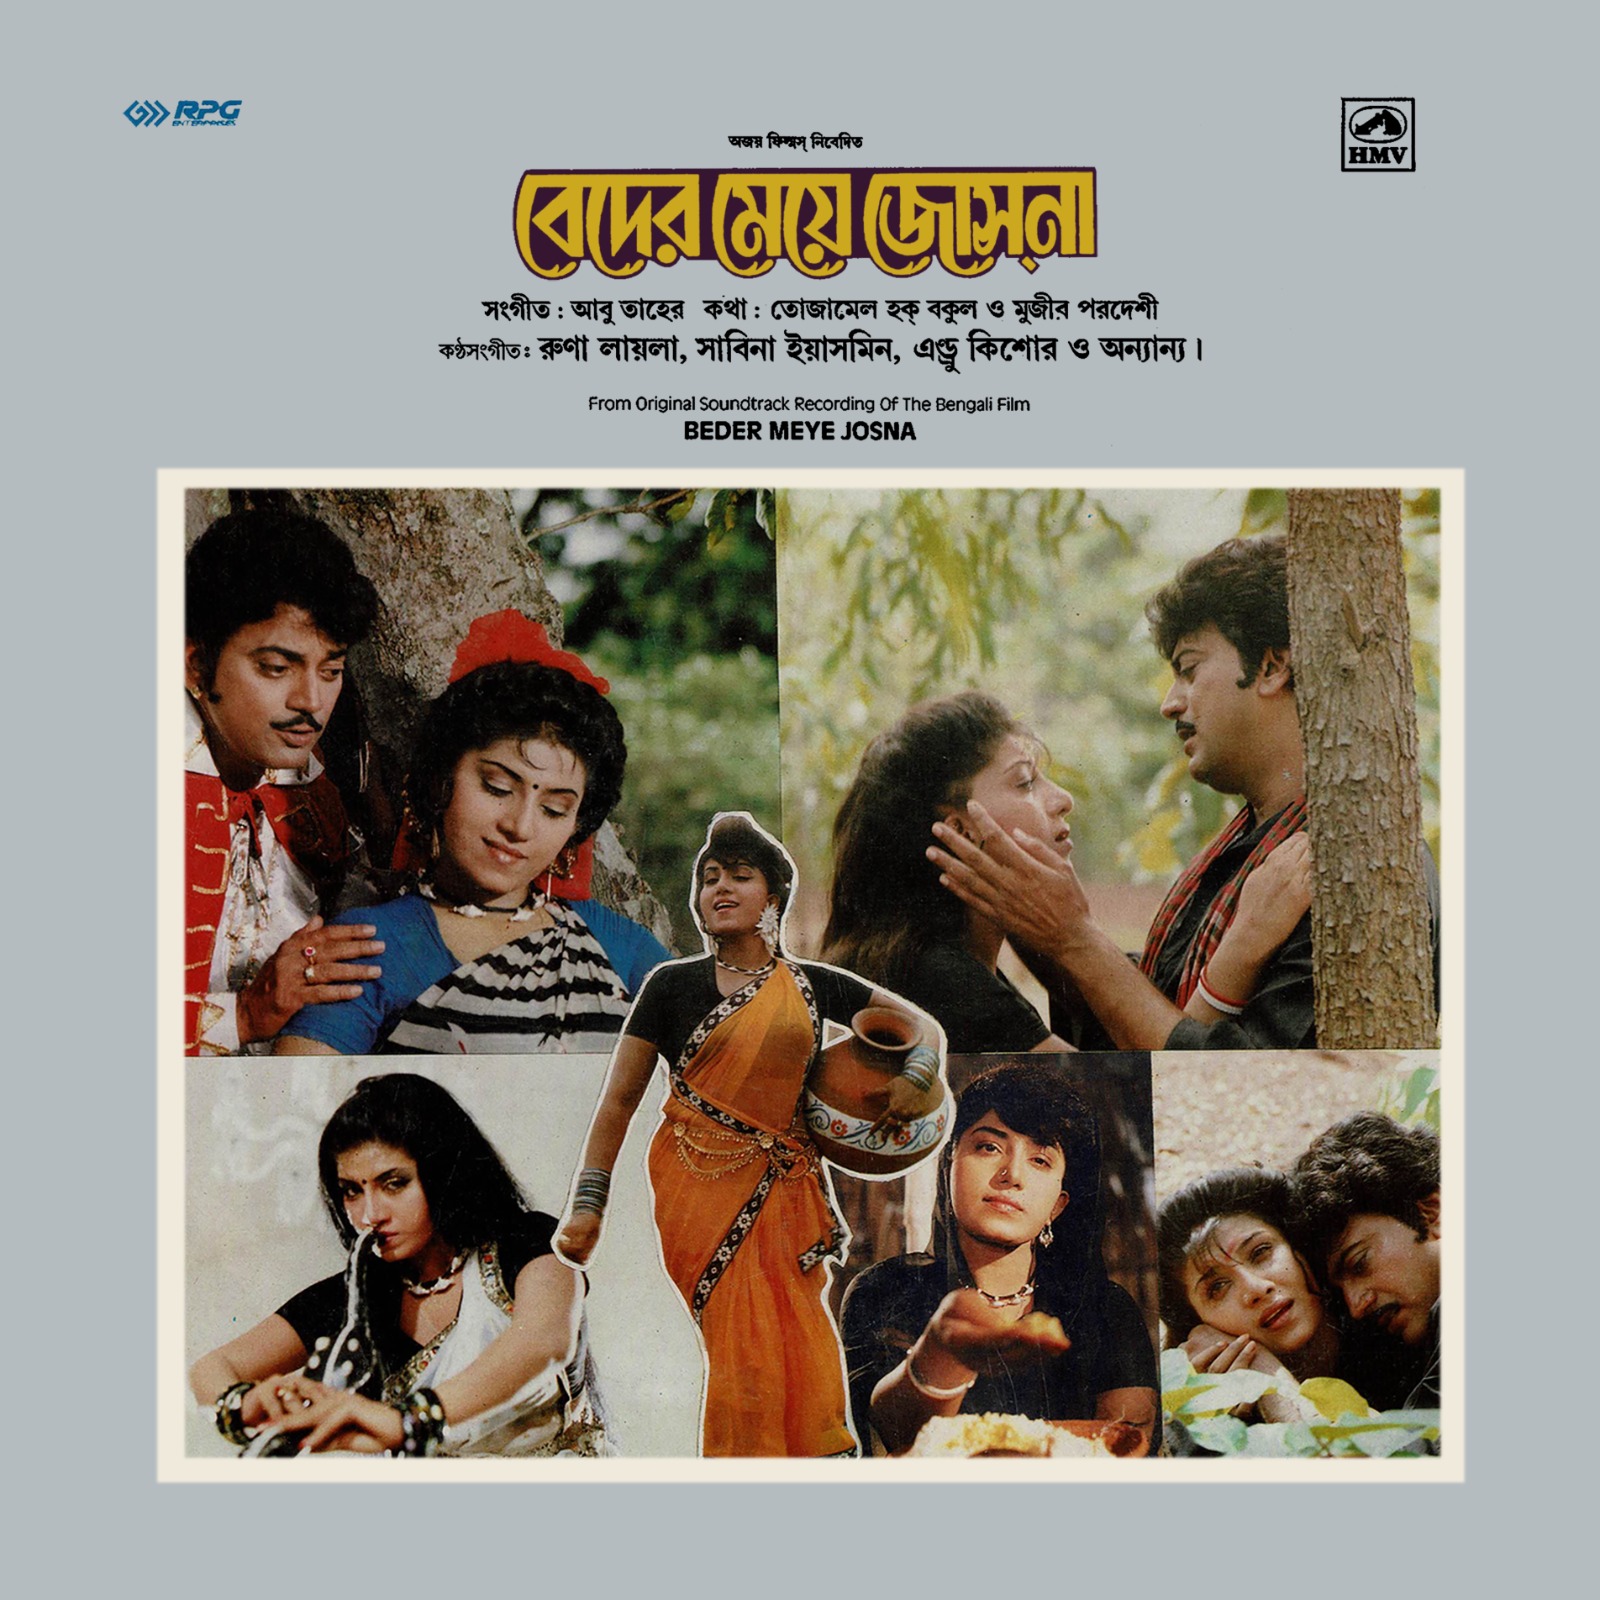 Guru Full Movie, Mithun Chakraborty, Tapas Paul, Bengali Movies